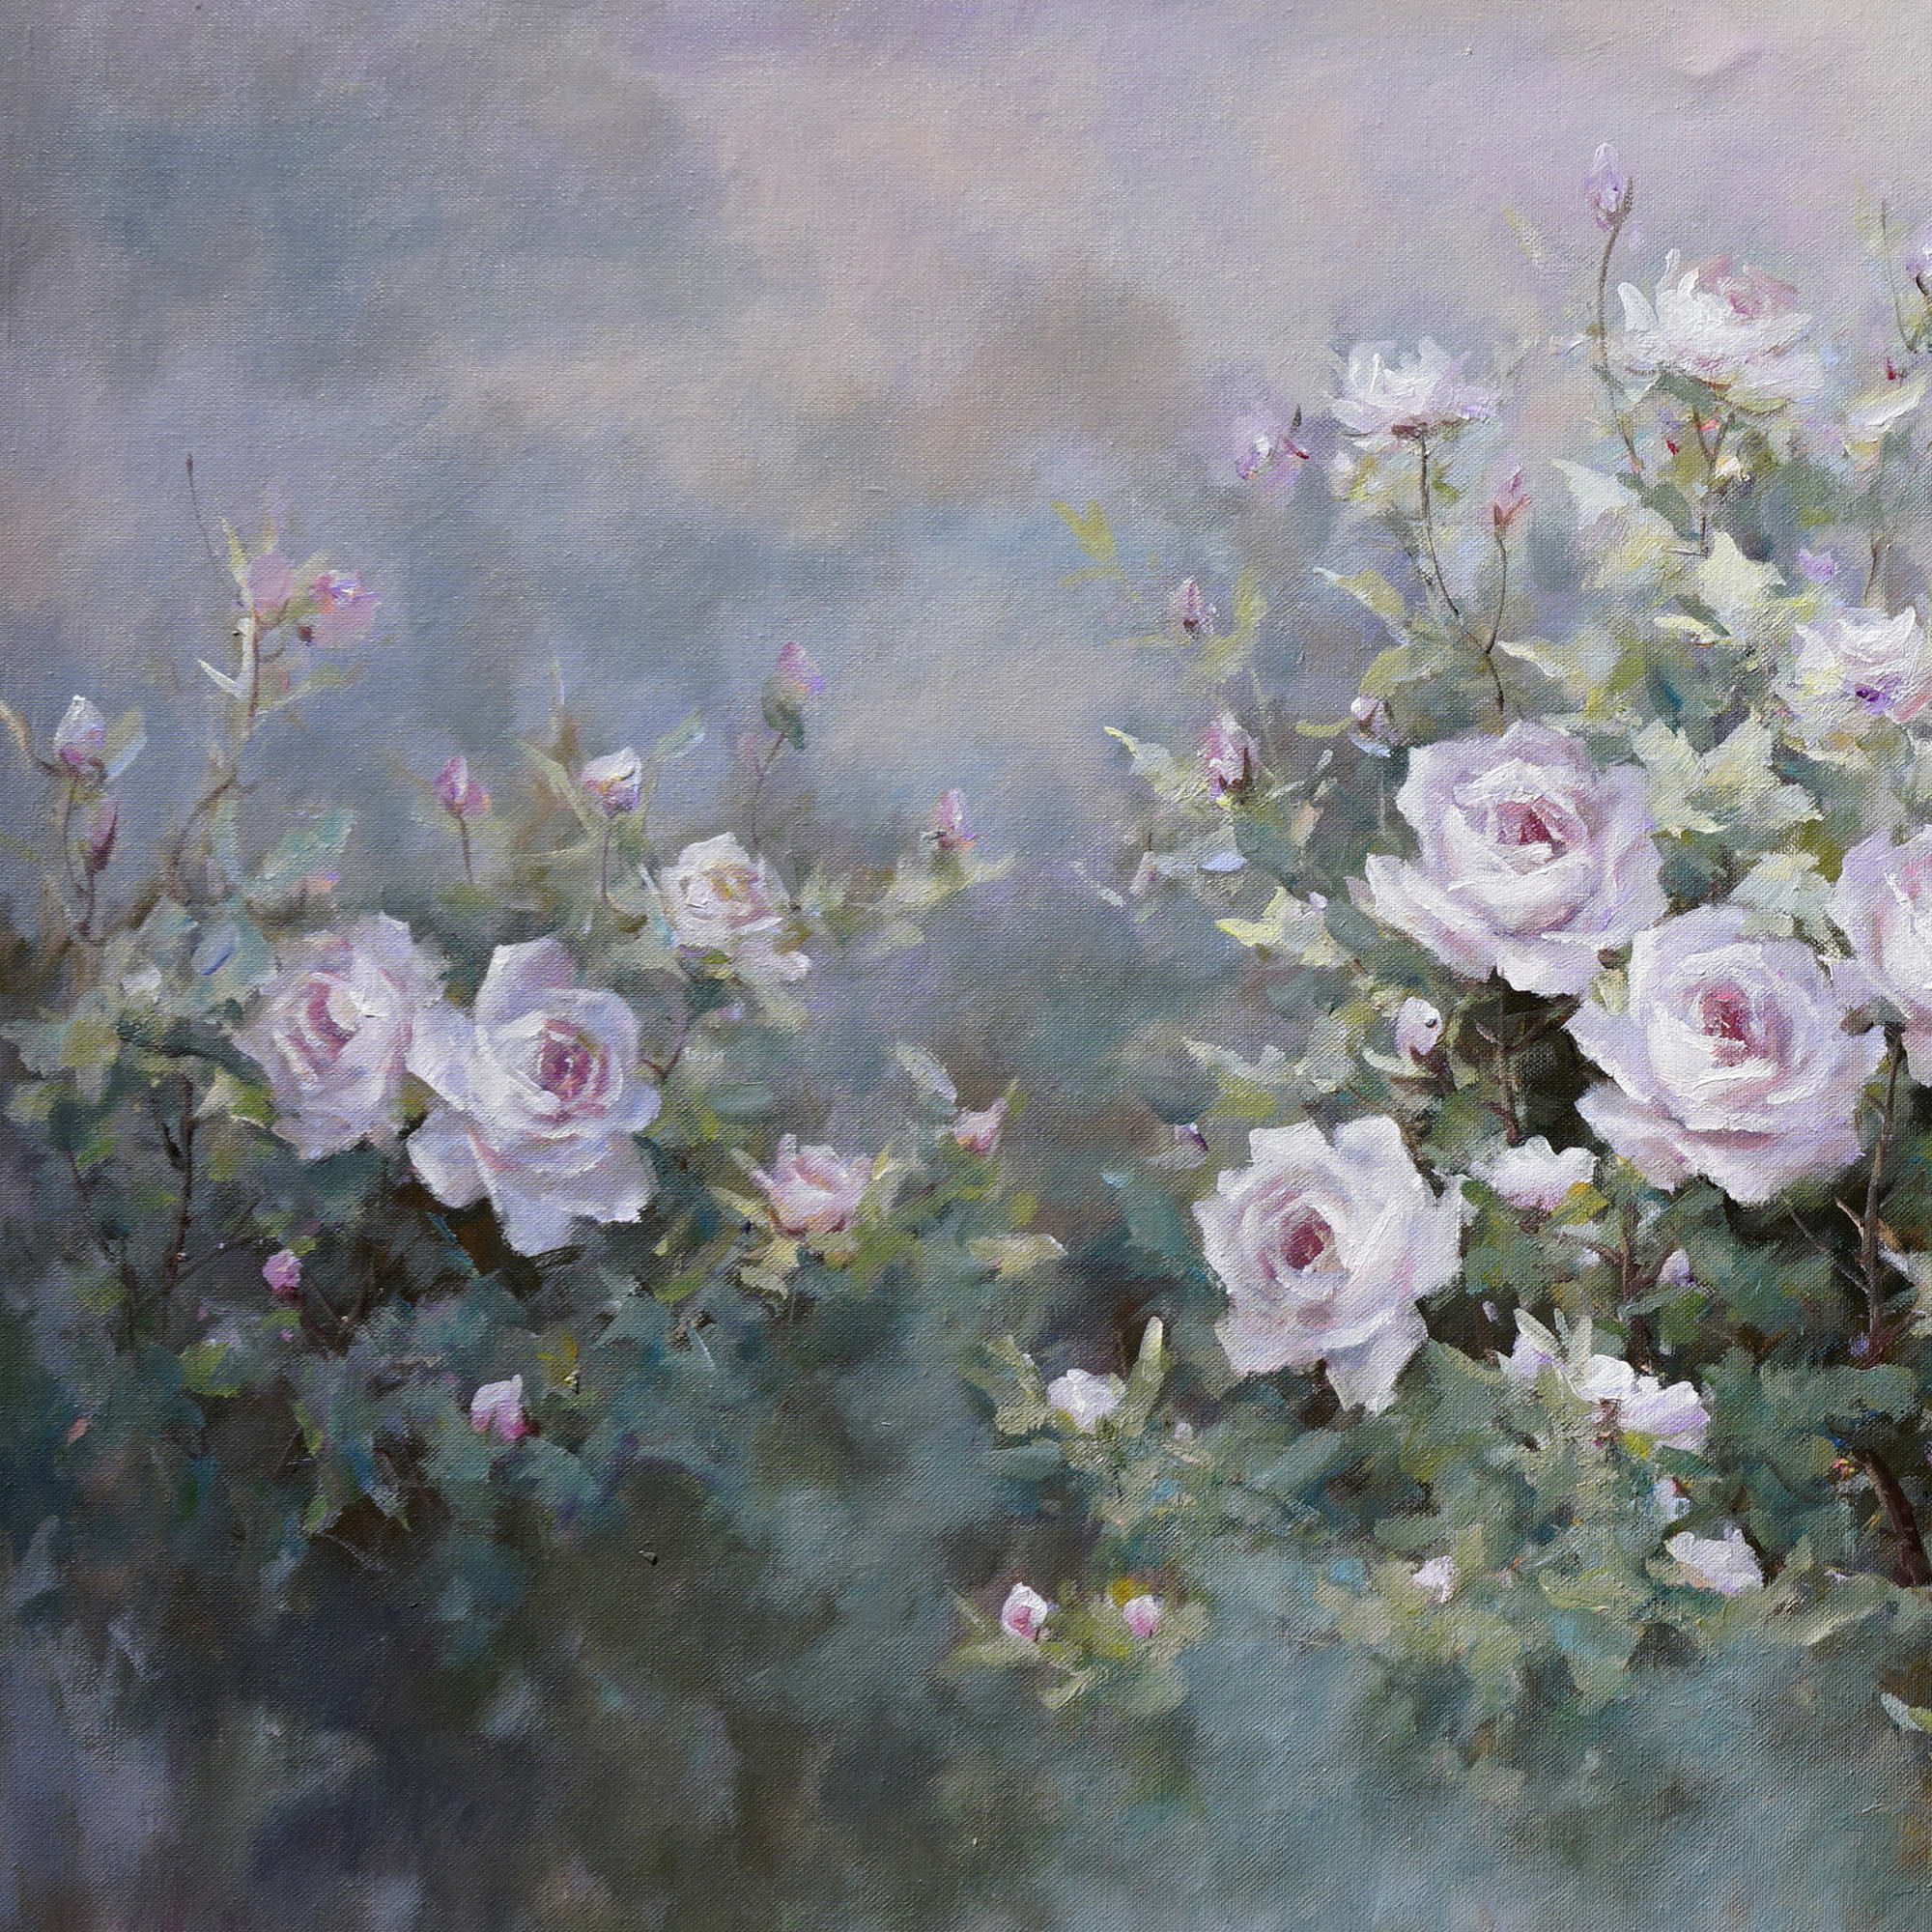 Hand painted Rose Garden 75x150cm